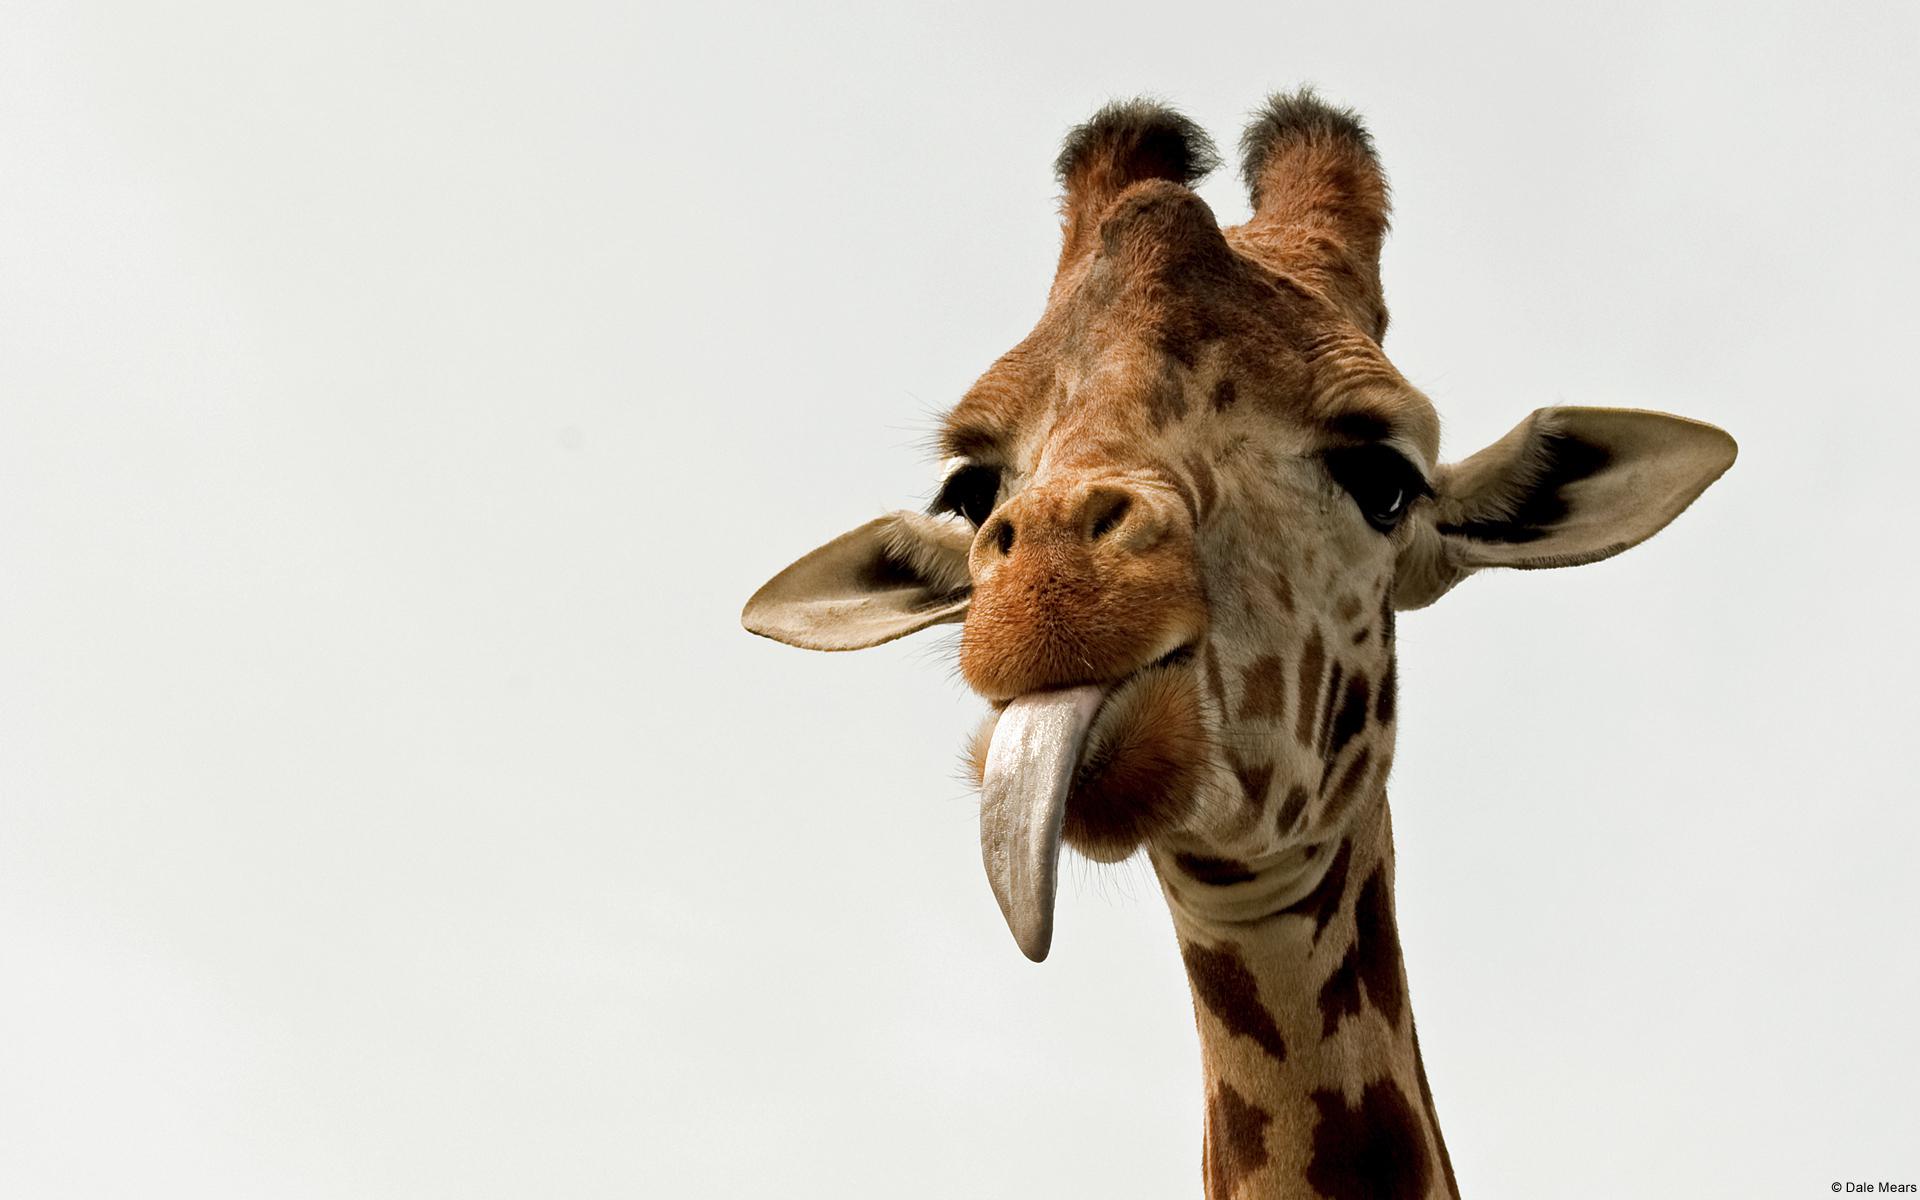 beautiful giraffe image